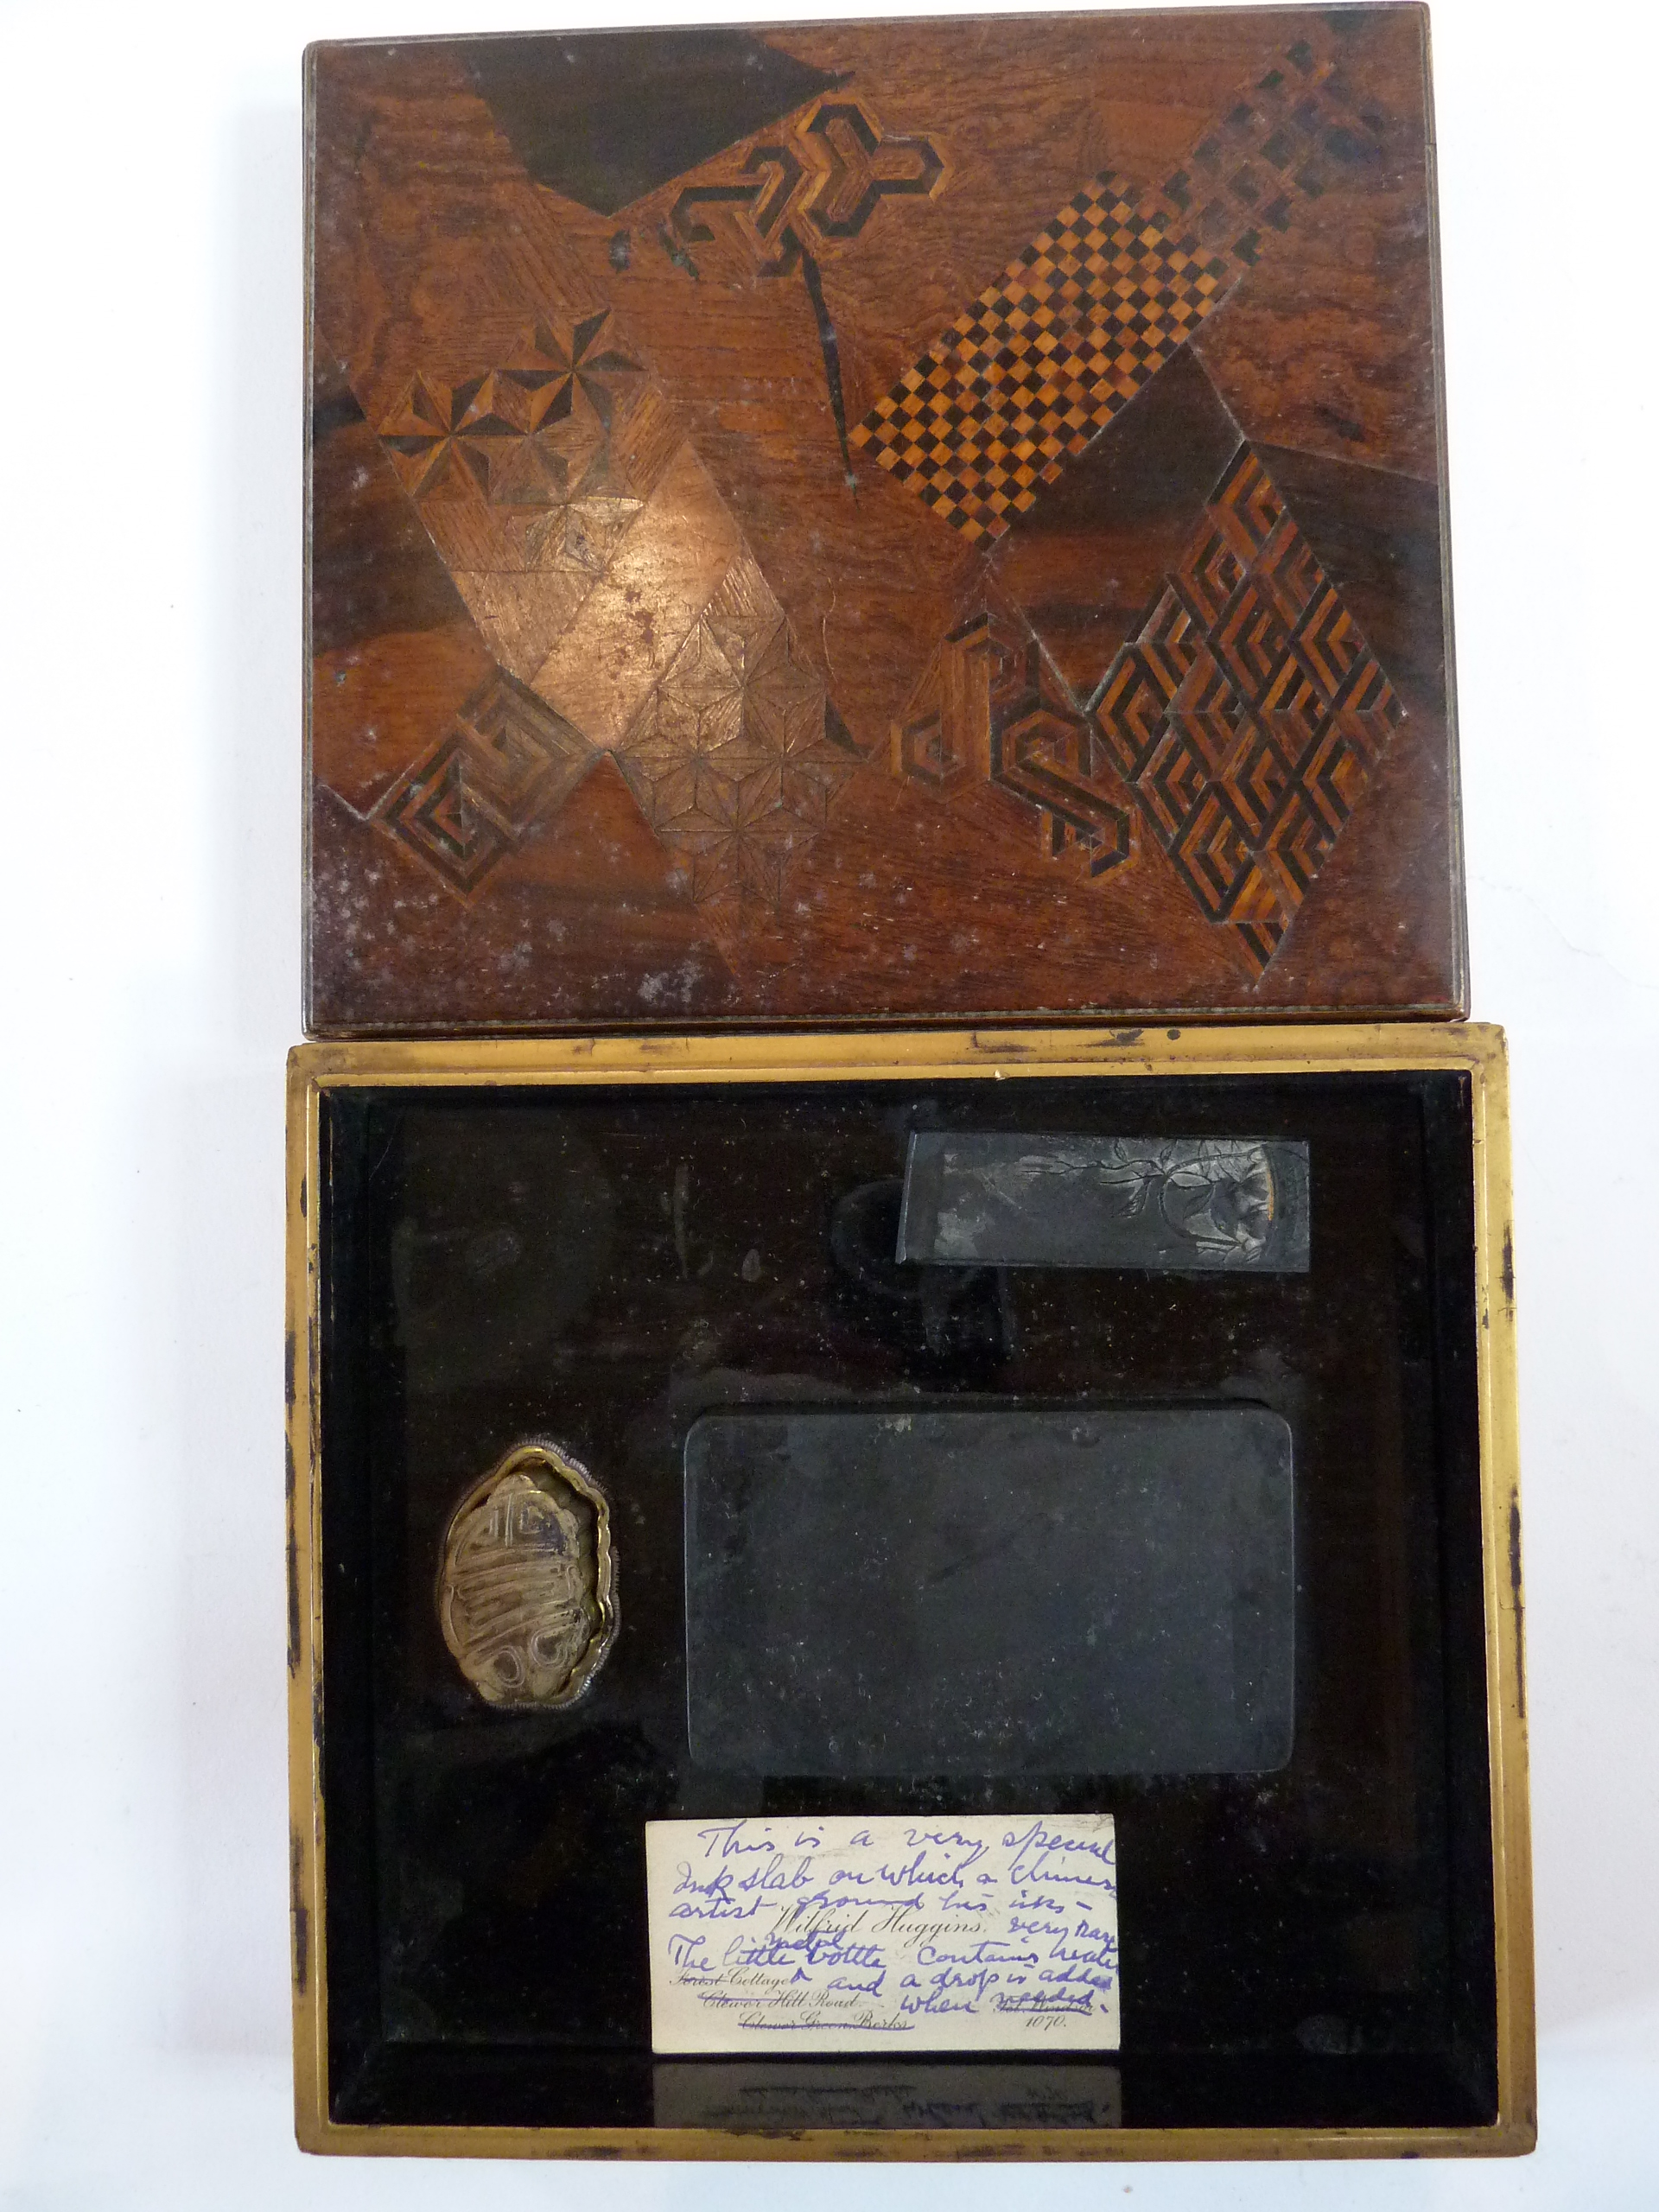 Nineteenth century Japanese lacquer Suzuribako (writing box), rectangular with parquetry inlaid